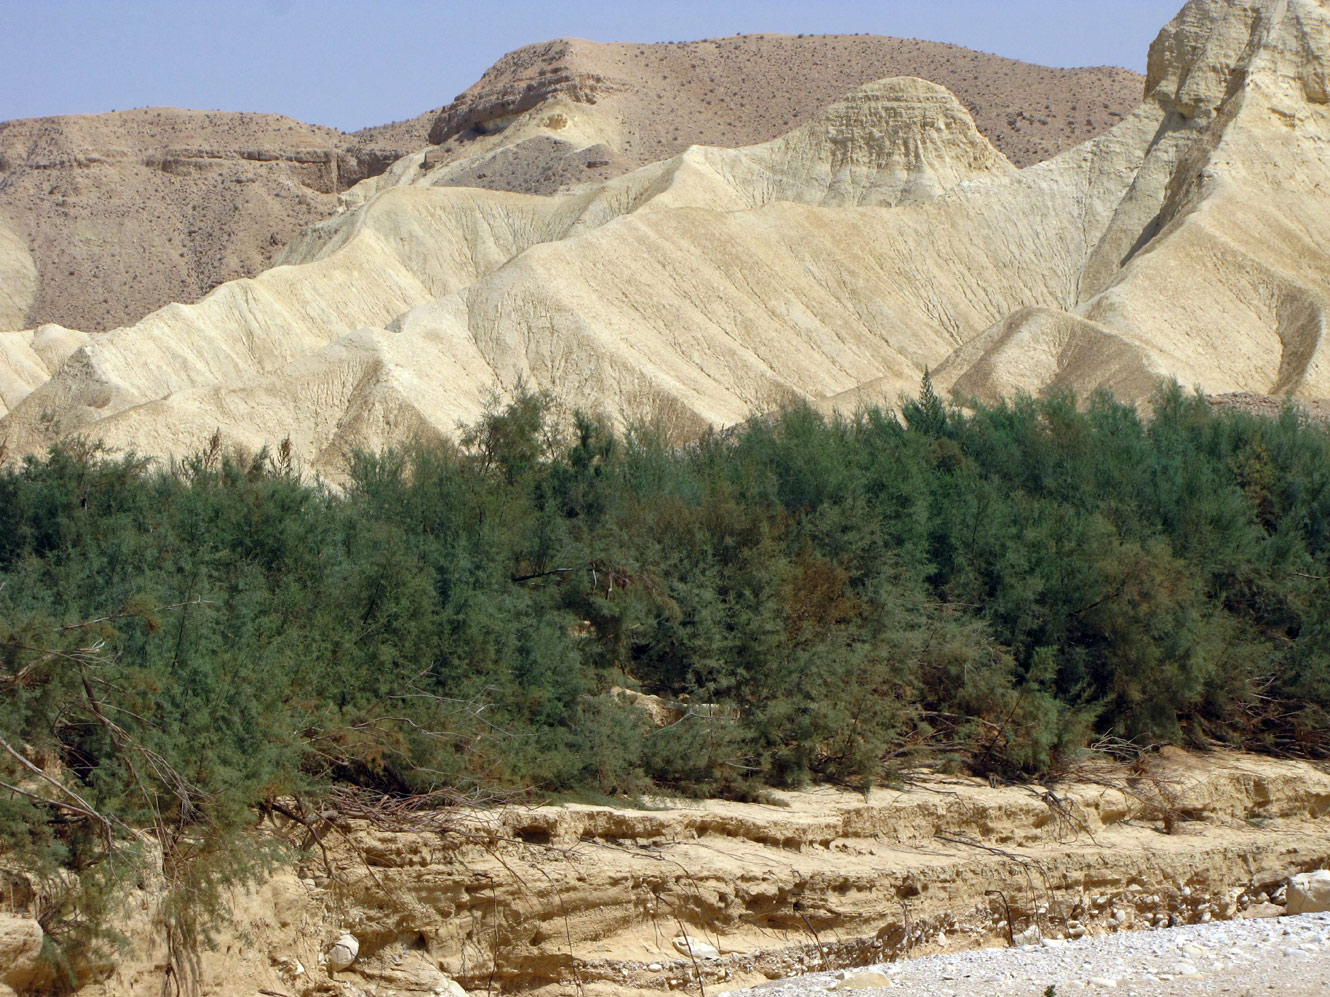 Нахаль Цын, image of landscape/habitat.